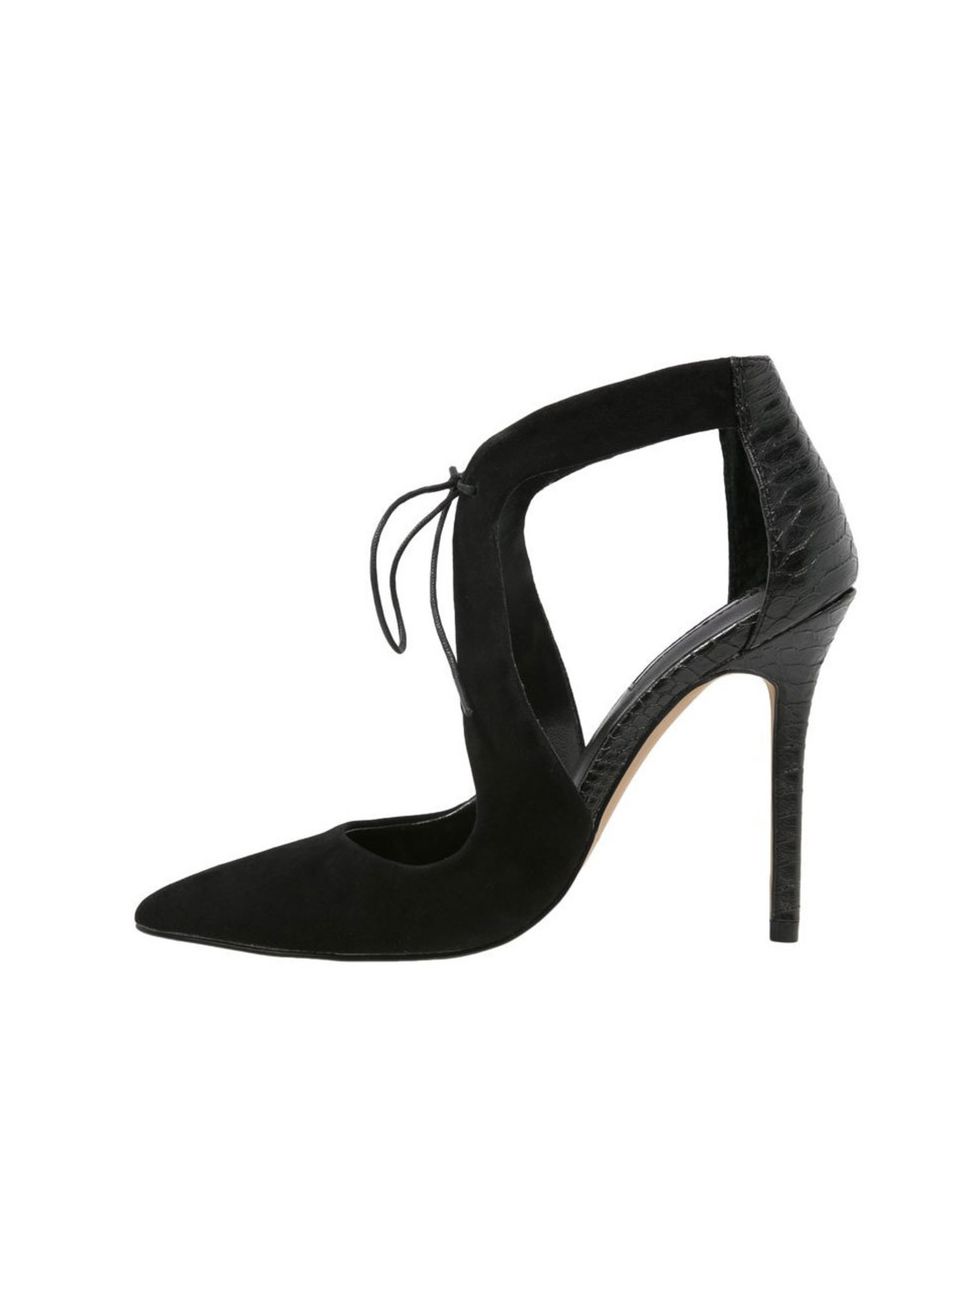 High heels, Basic pump, Black, Tan, Grey, Beige, Sandal, Fashion design, Court shoe, Leather, 